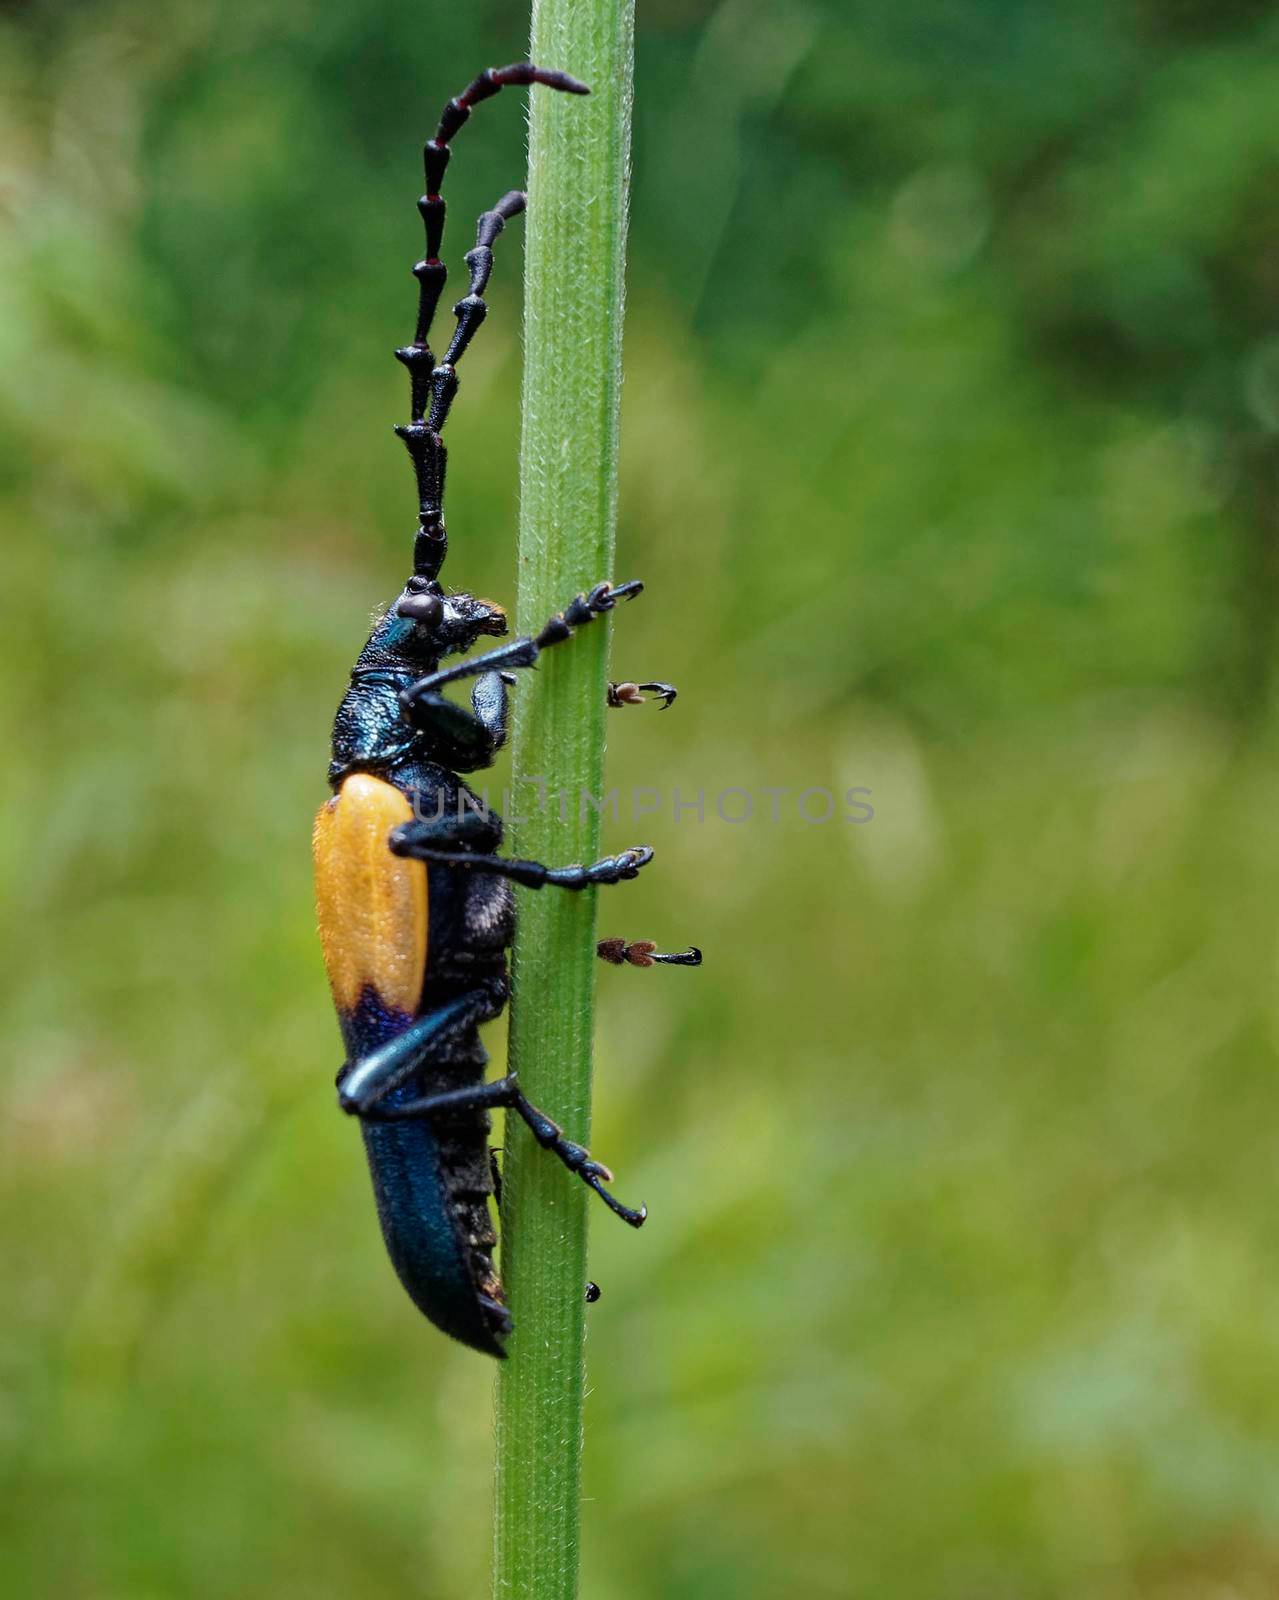 Elderberry borer beetle on grass.